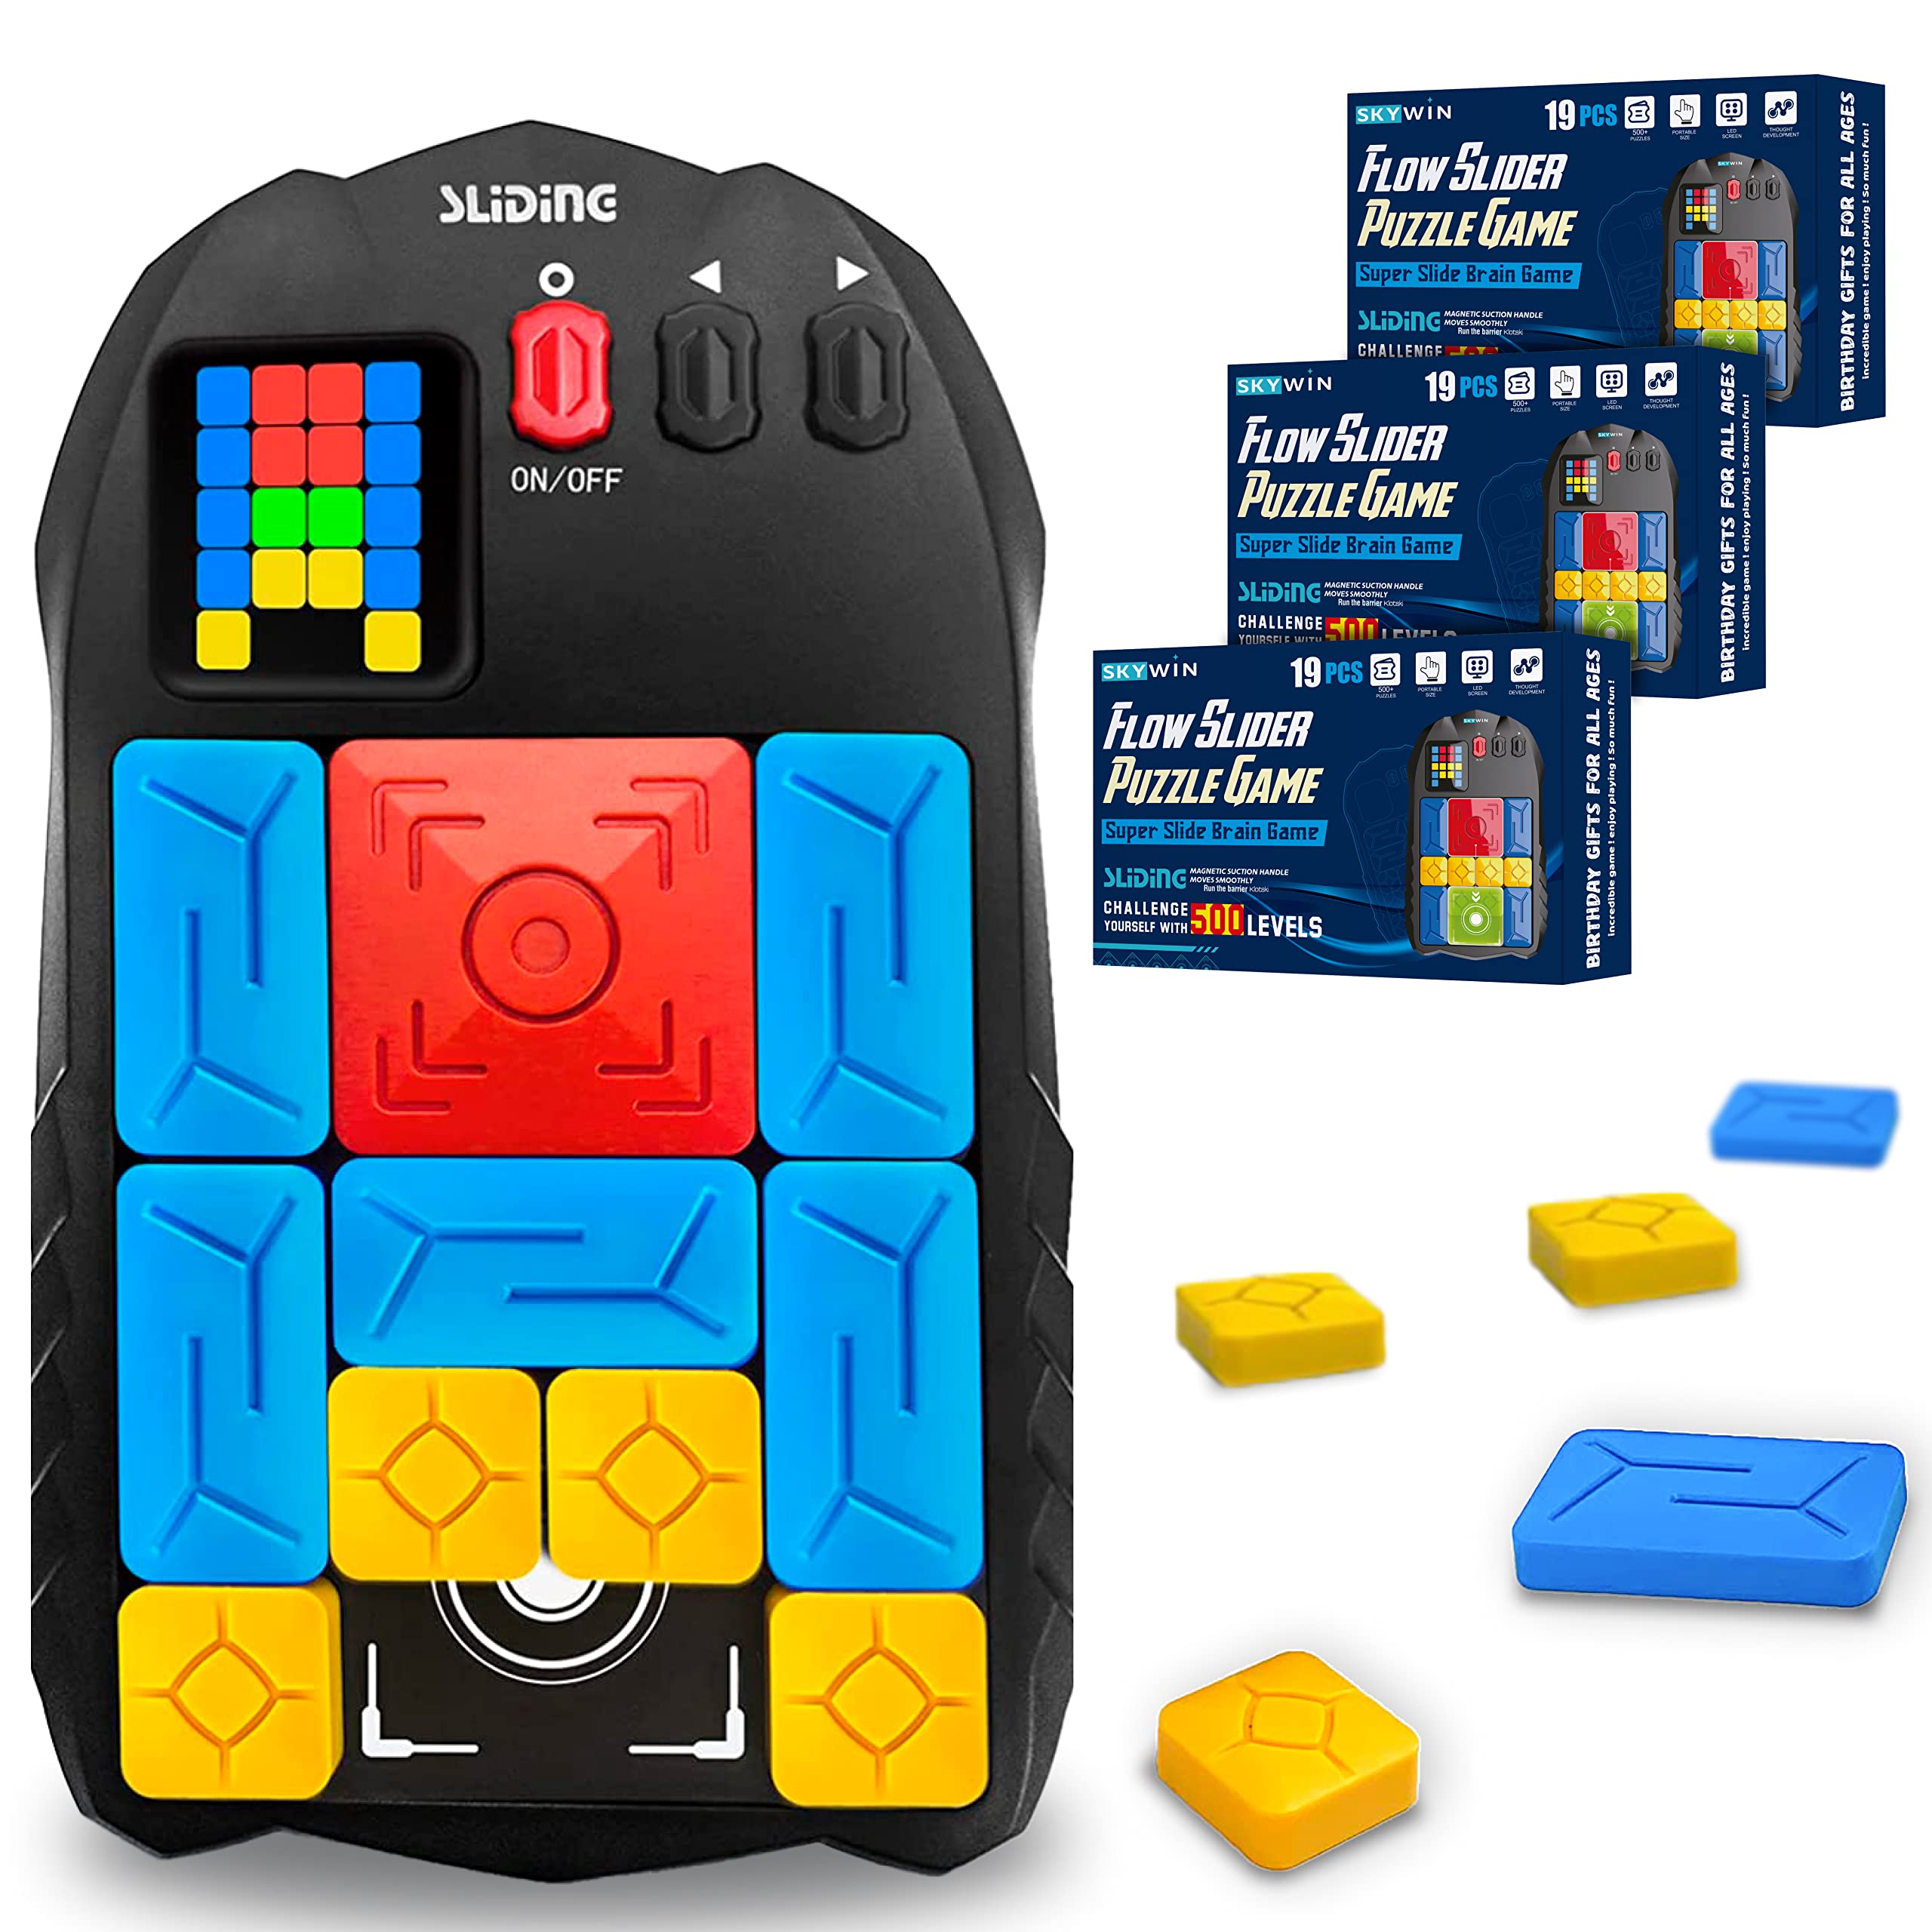 Skywin Klotski Puzzle Game - 3 Pack 500 Entertaining Fun Mind Training IQ Puzzles - Unblock Super Slide Electronic Sliding